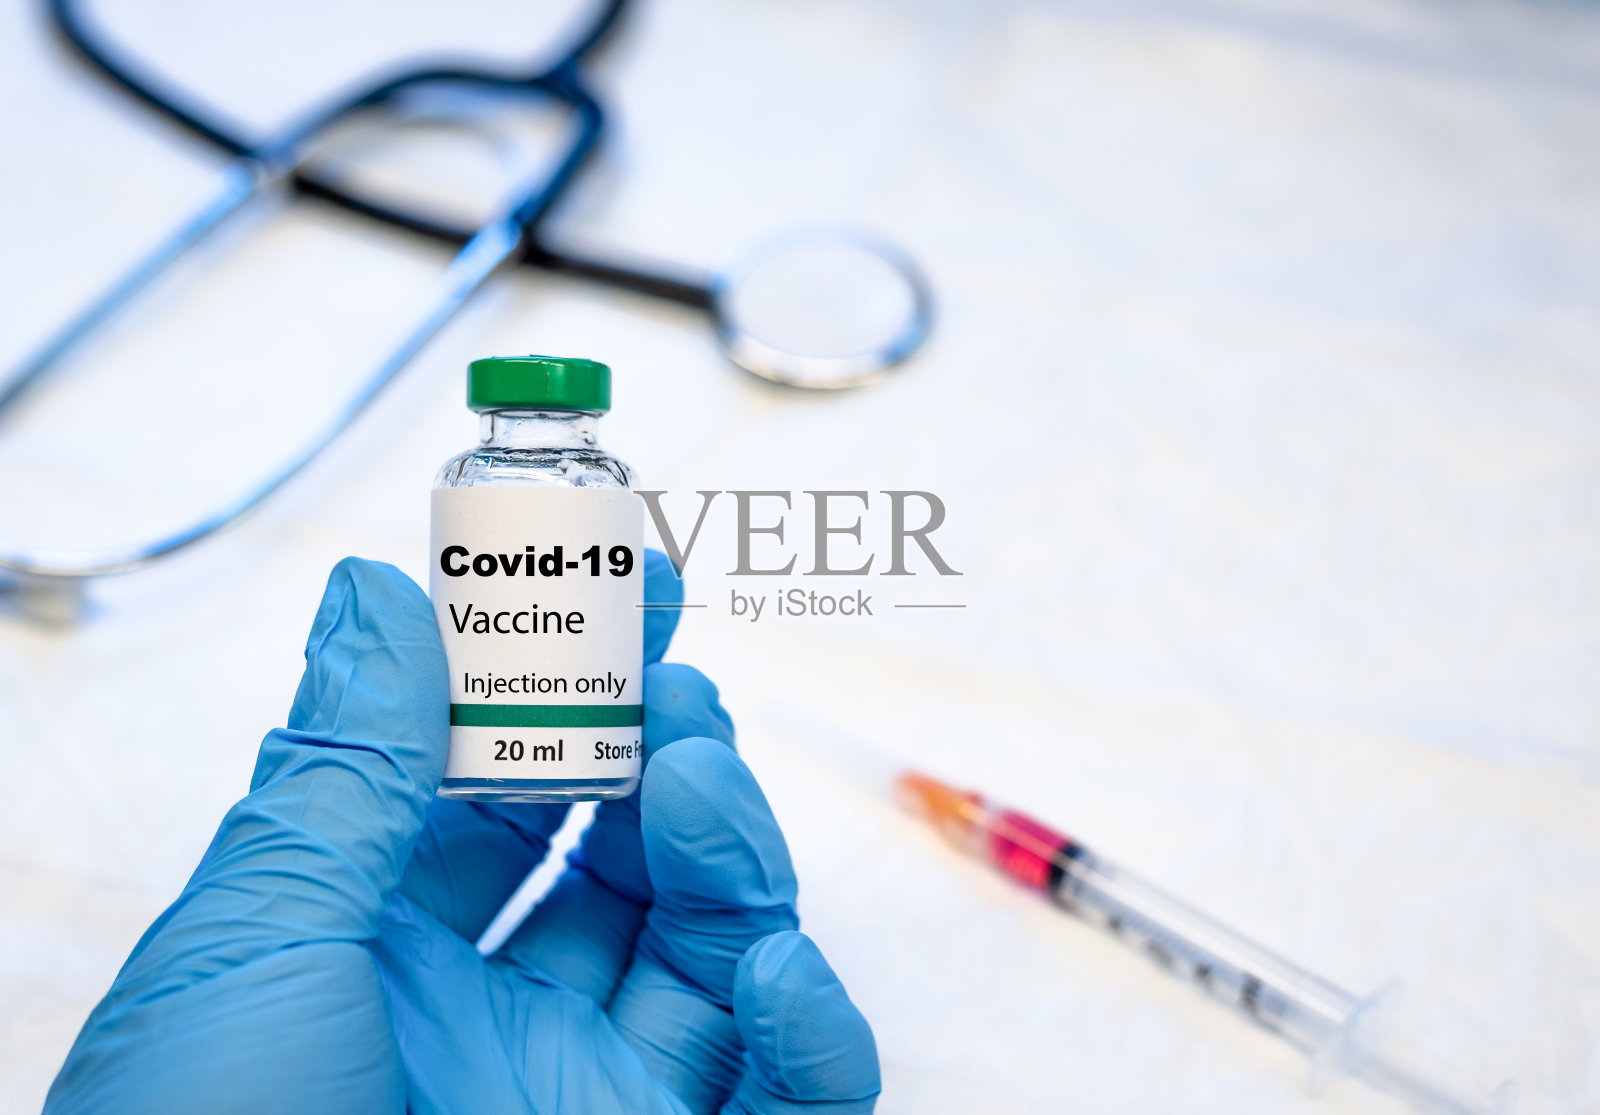 Covid-19冠状病毒疫苗瓶，带注射器和听诊器照片摄影图片